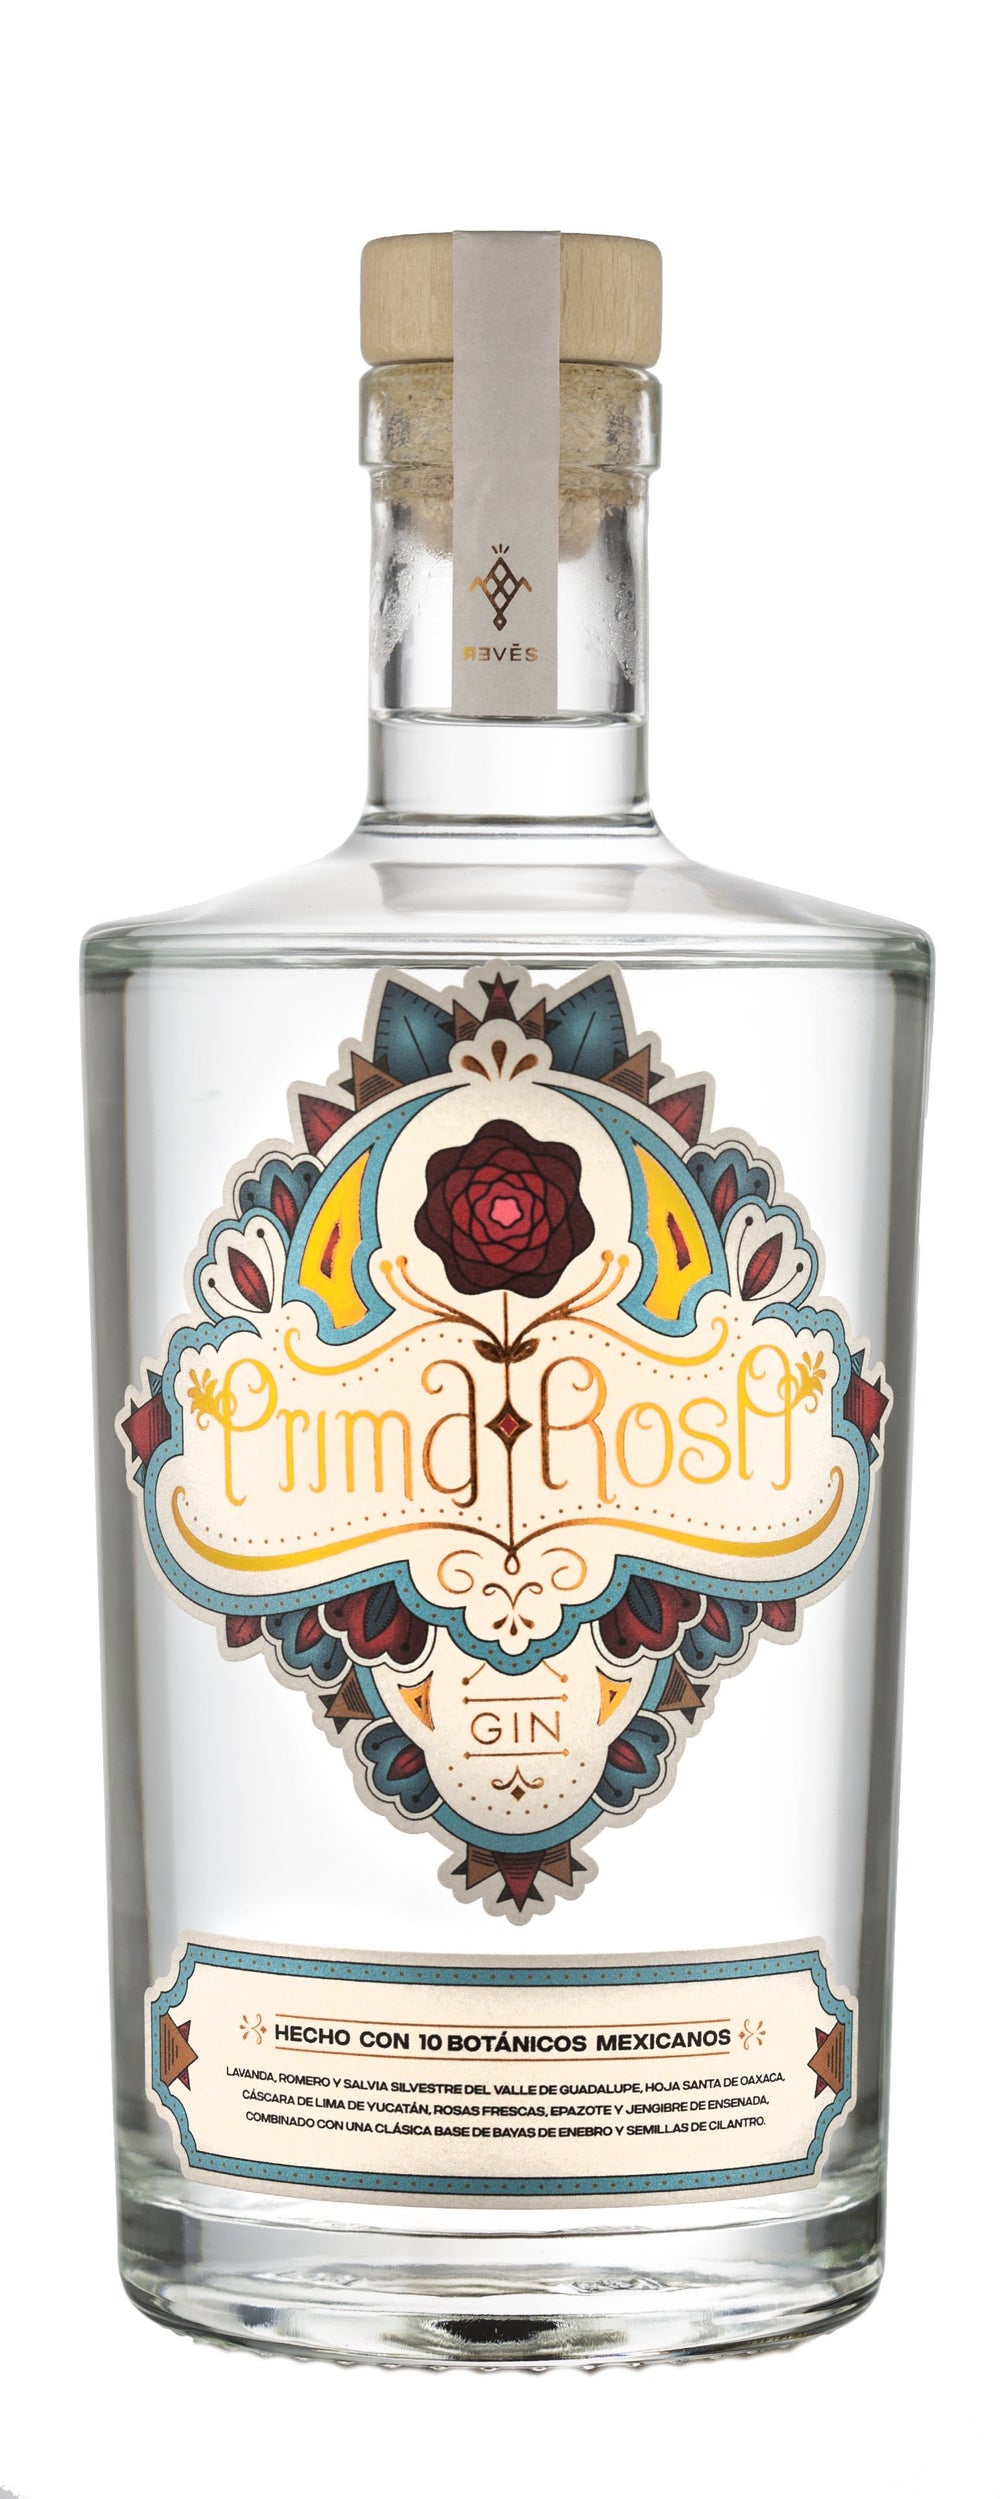 Ginebra Prima Rosa Gin 750 ml